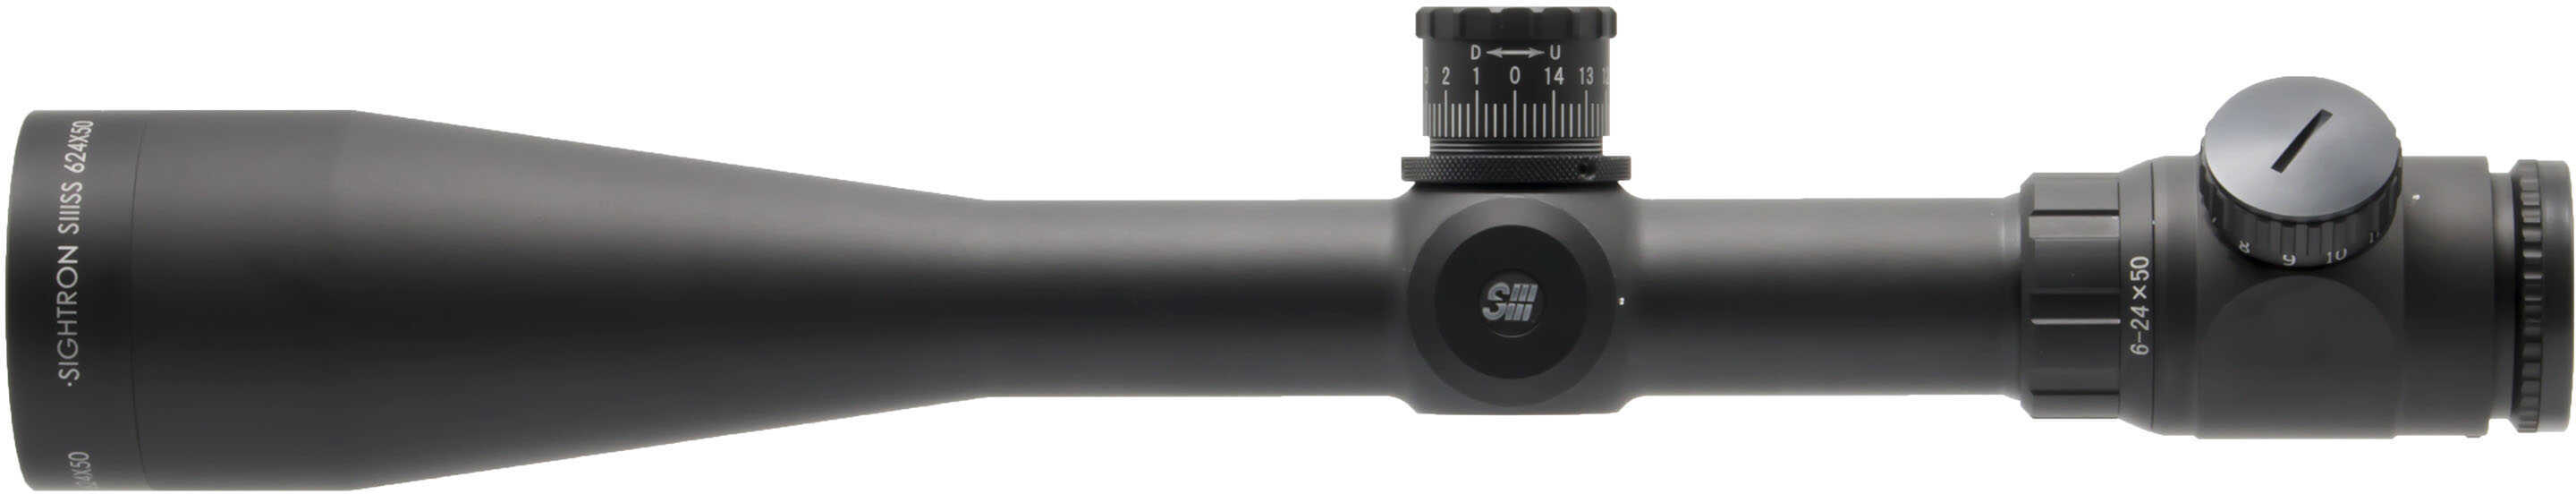 Sightron SIII Long Range Riflescope 6-24x50mm, 30mm Tube, MOA-2 (IR) Reticle, Black